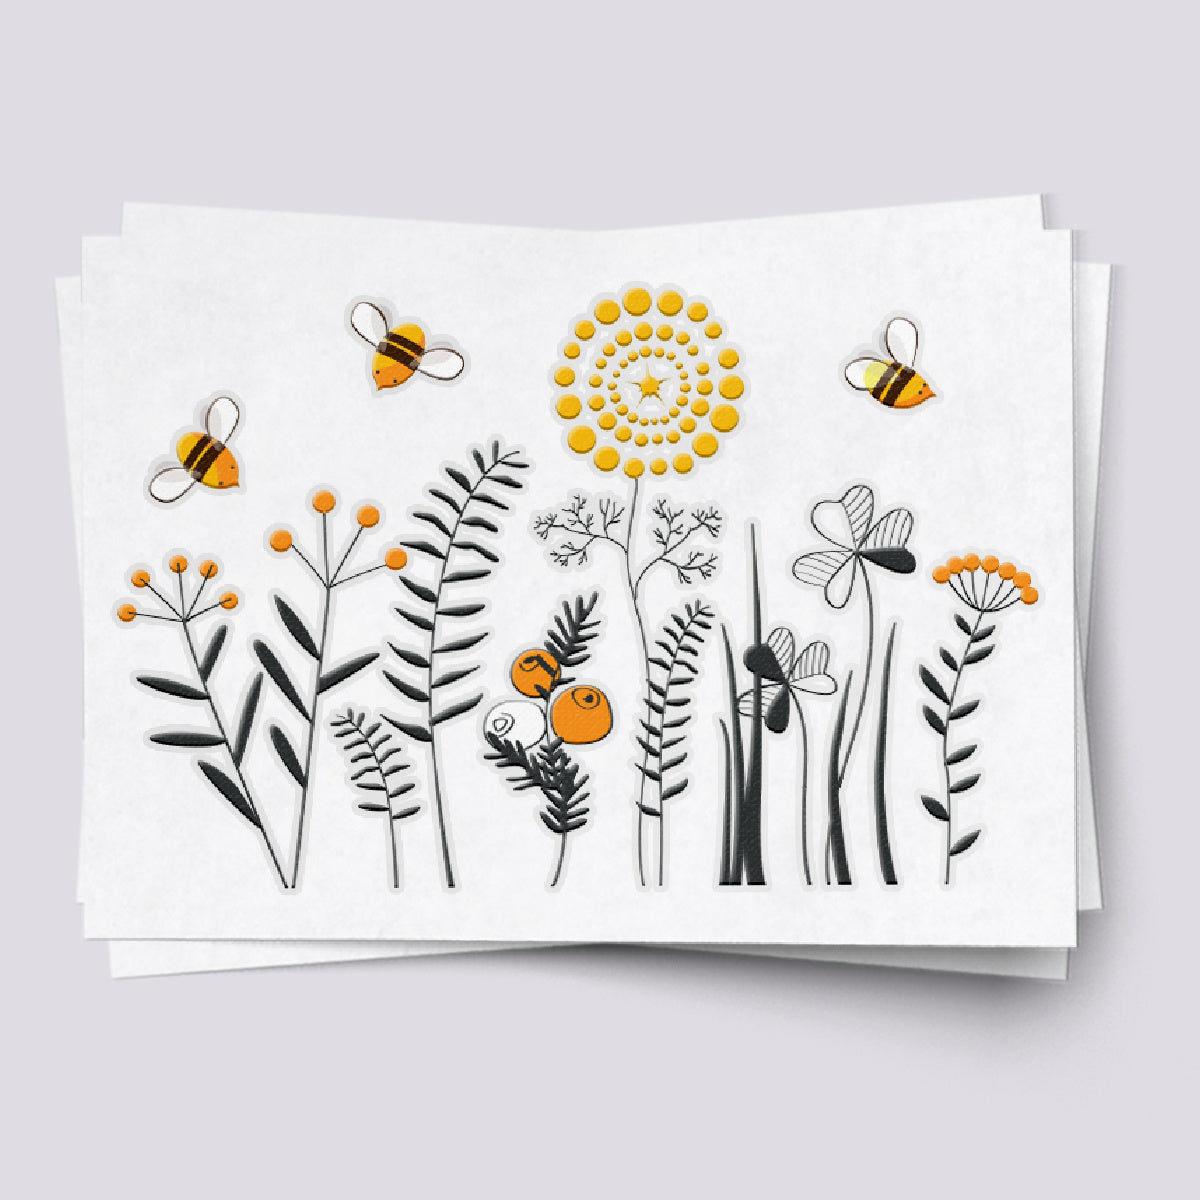 Honey Bees & Wild Flowers Temporary Tattoos - Kids Party Fun